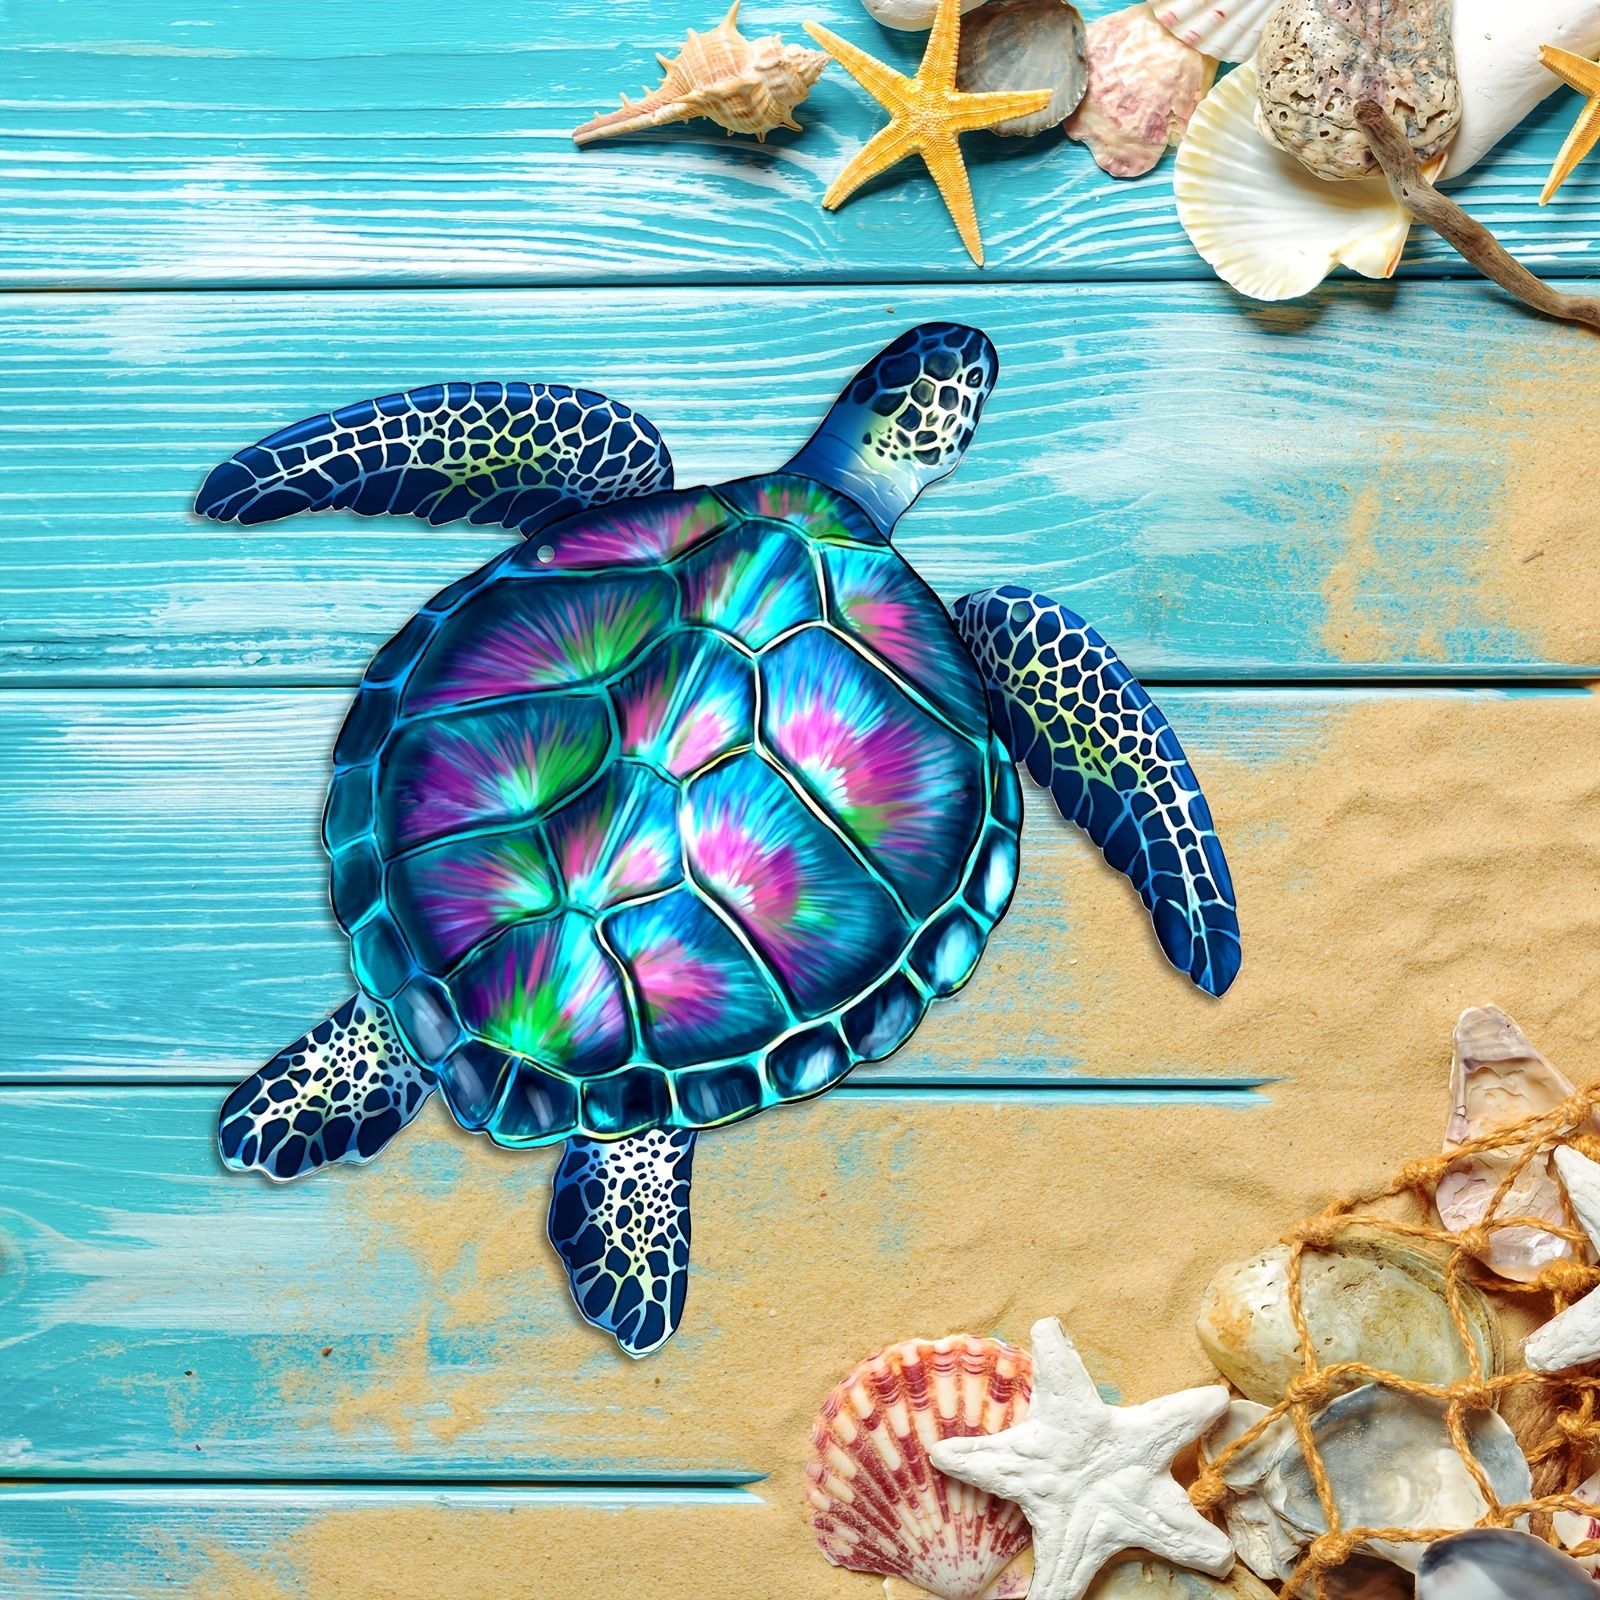 sea turtles paintings